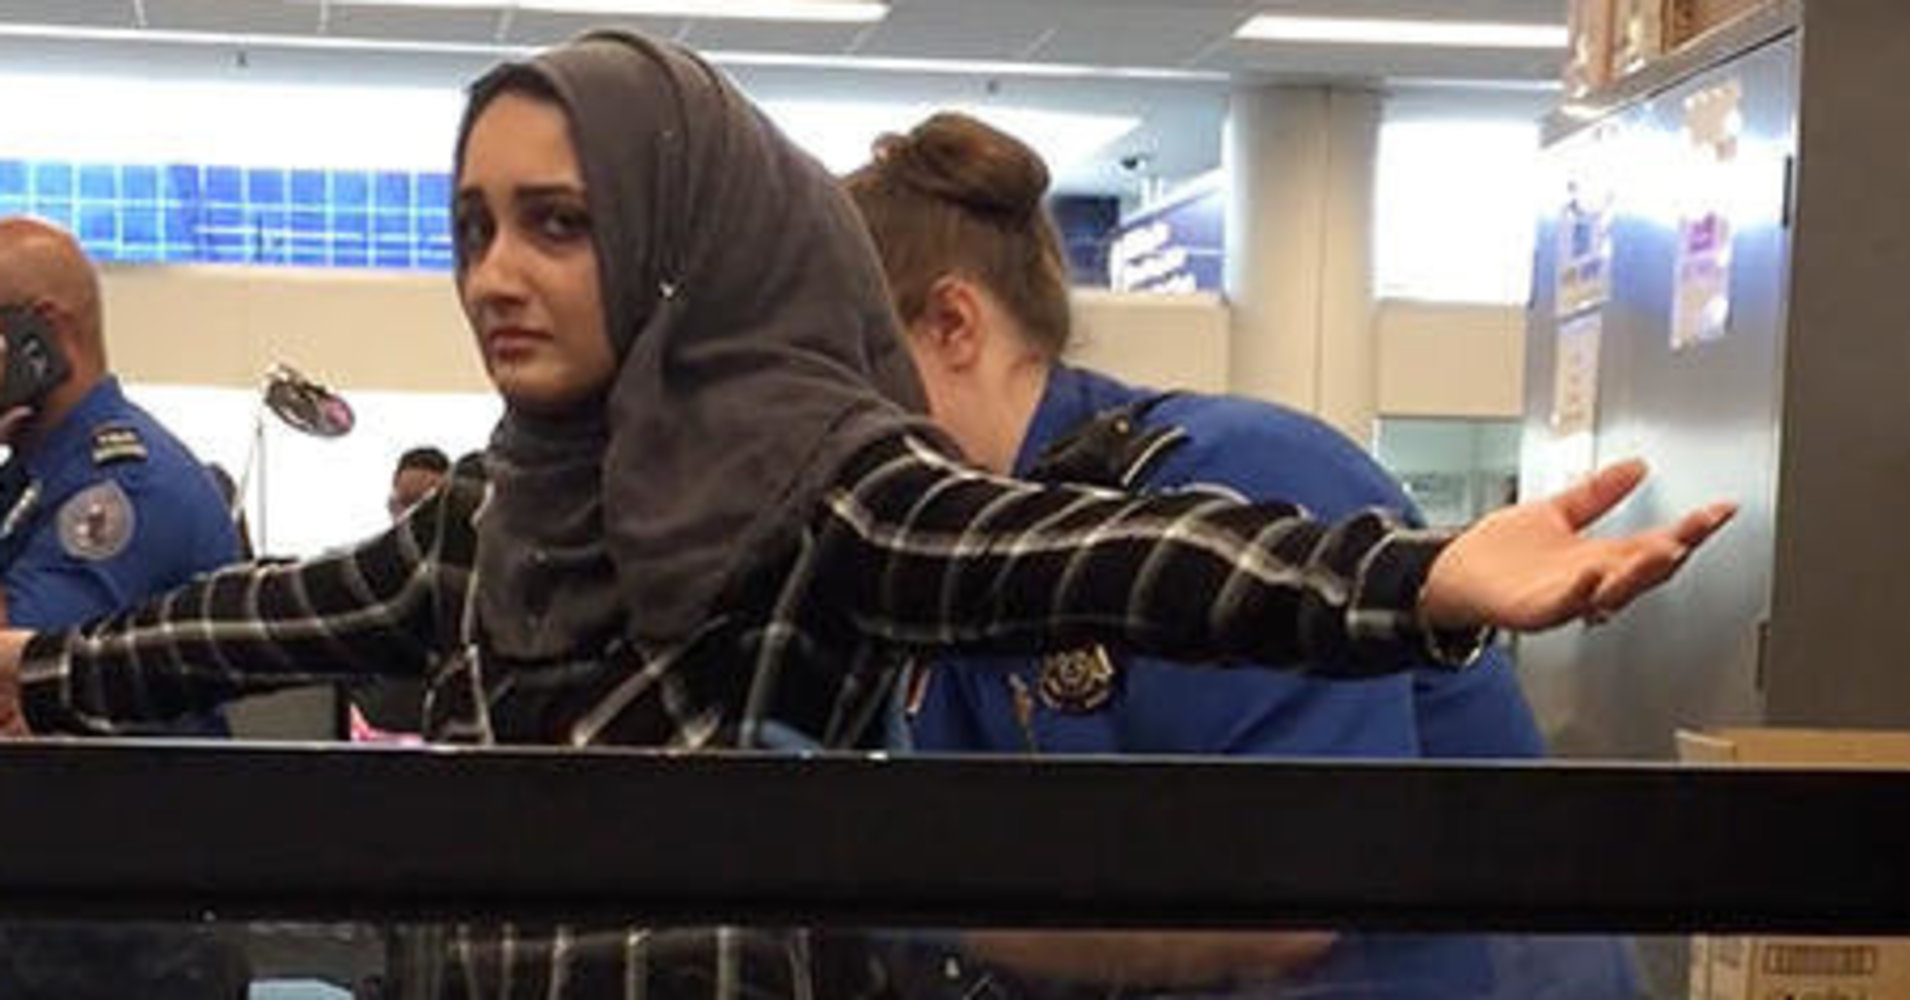 shocking experience of zainab in washington airport